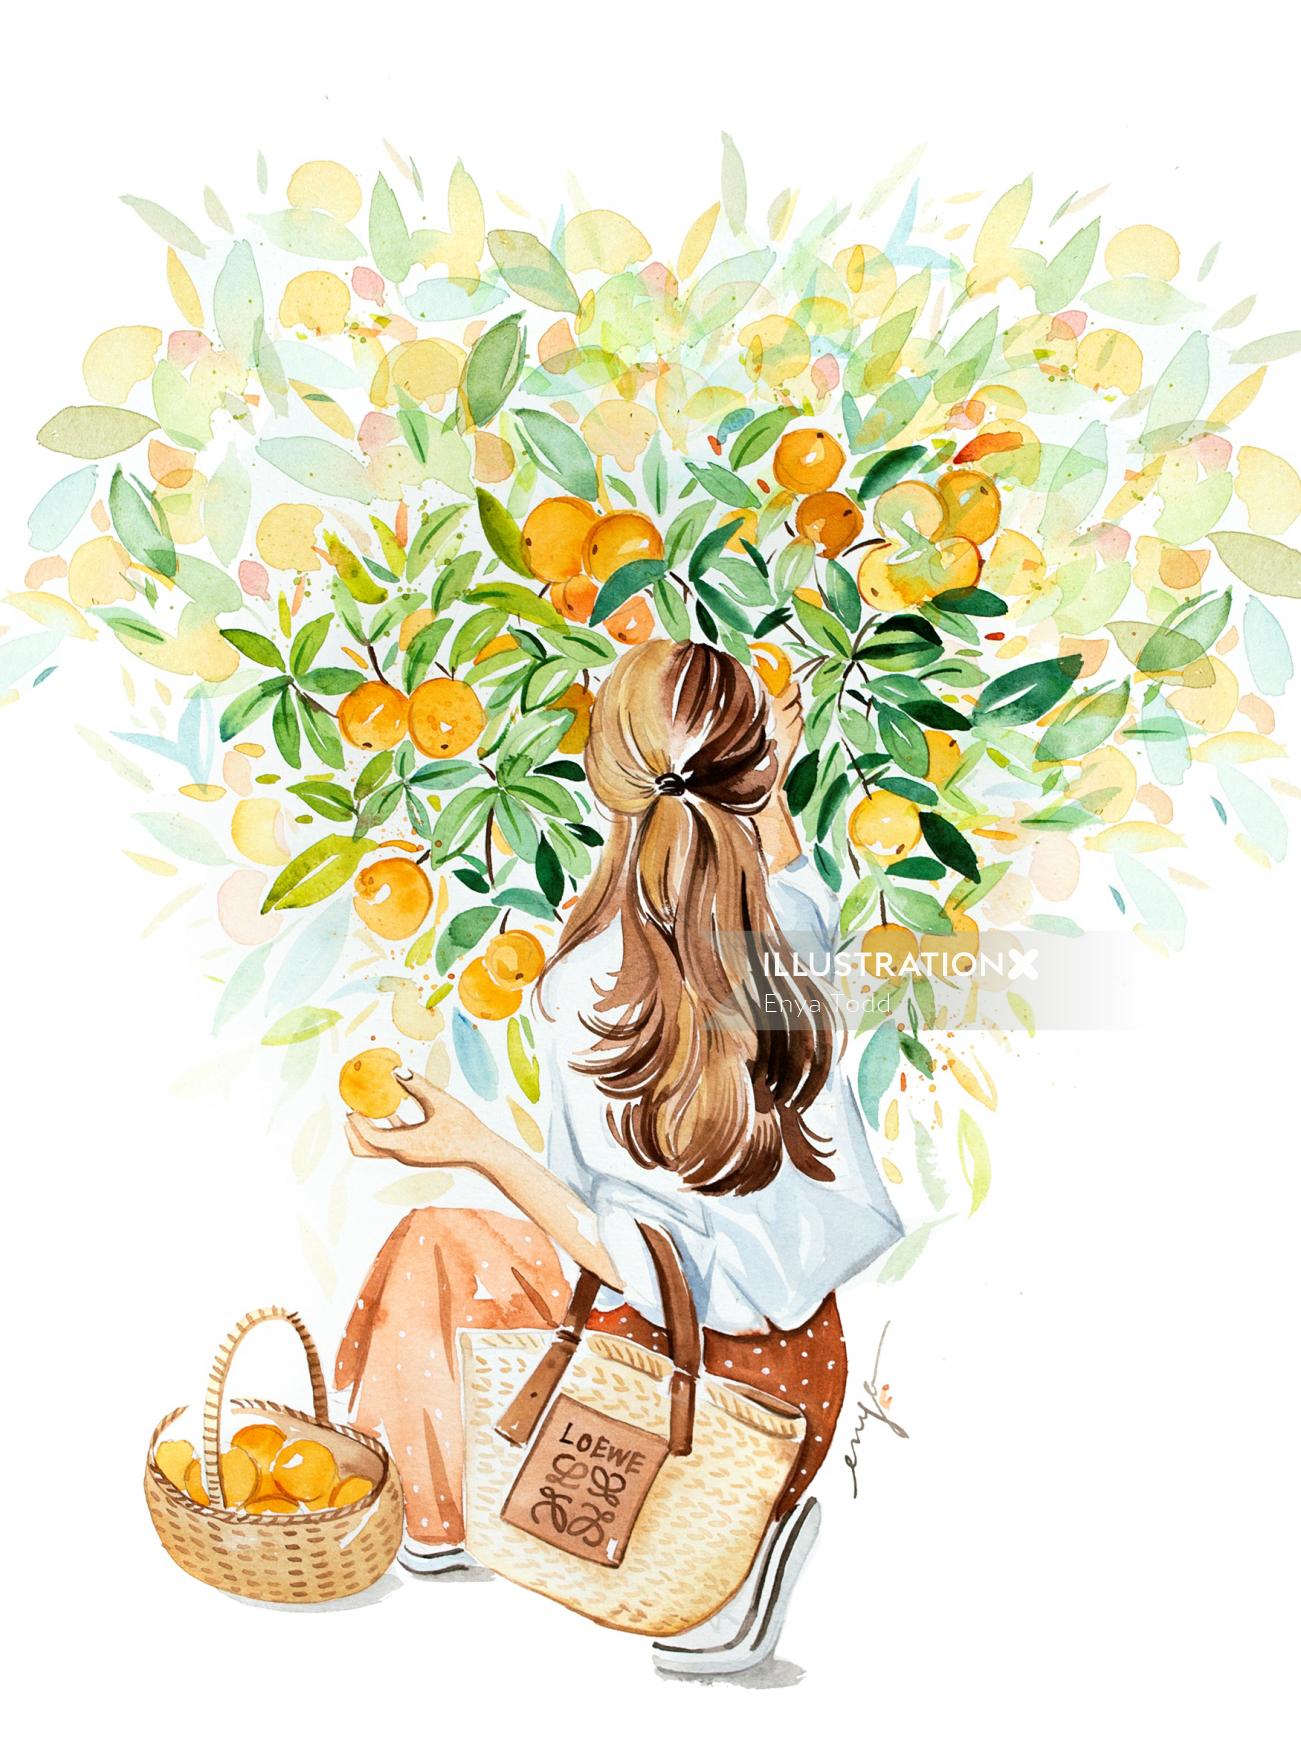 Women picking orange fruit from a tree